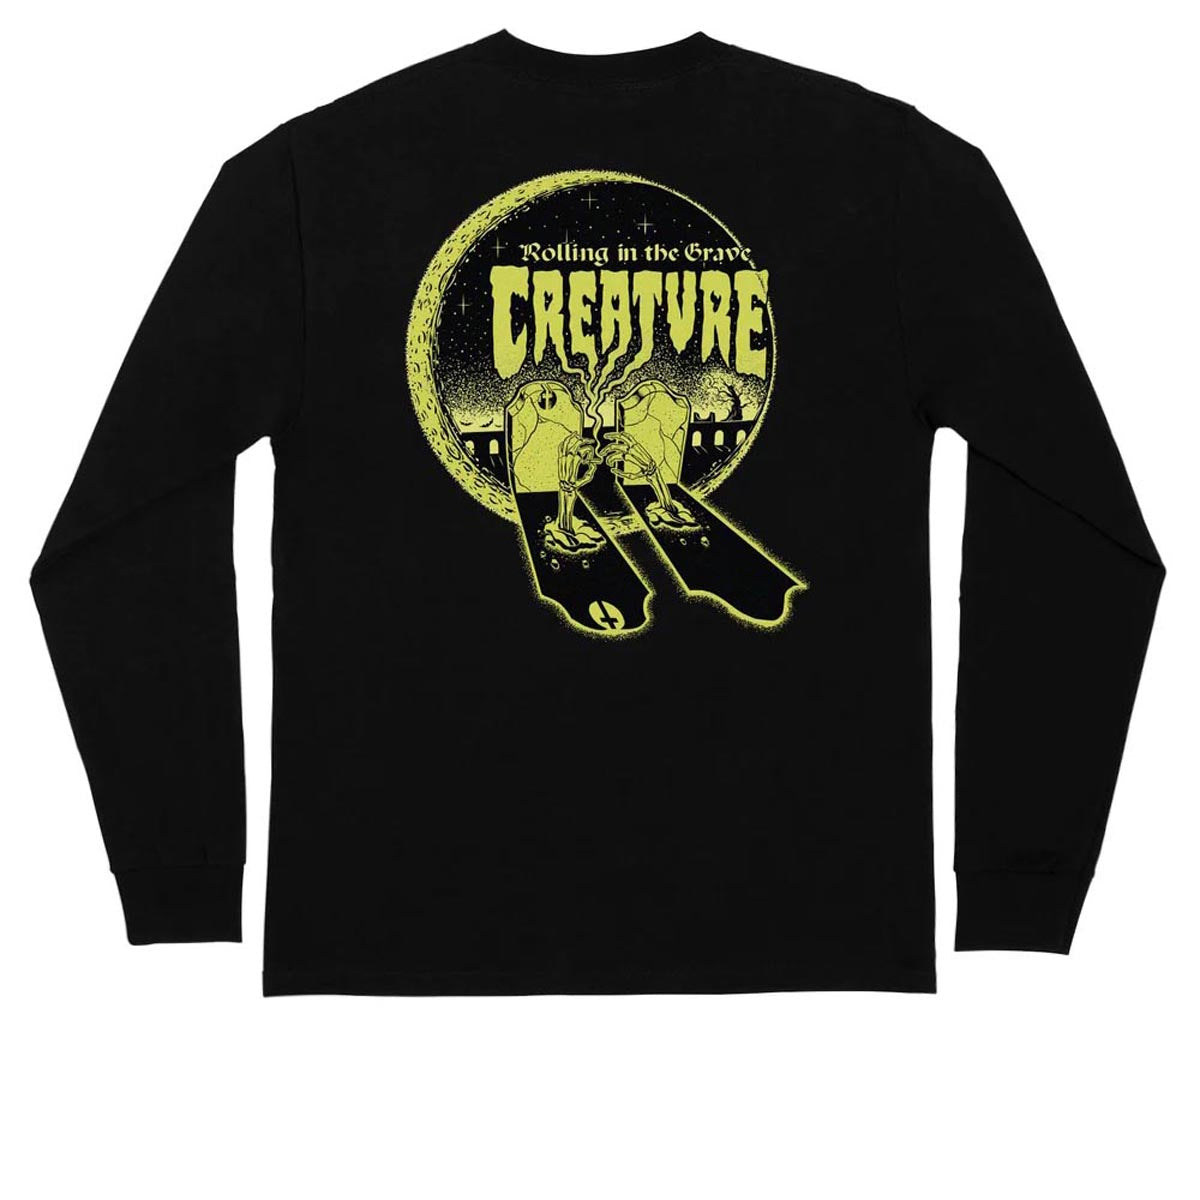 Creature Grave Roller Long Sleeve T-Shirt - Black image 1